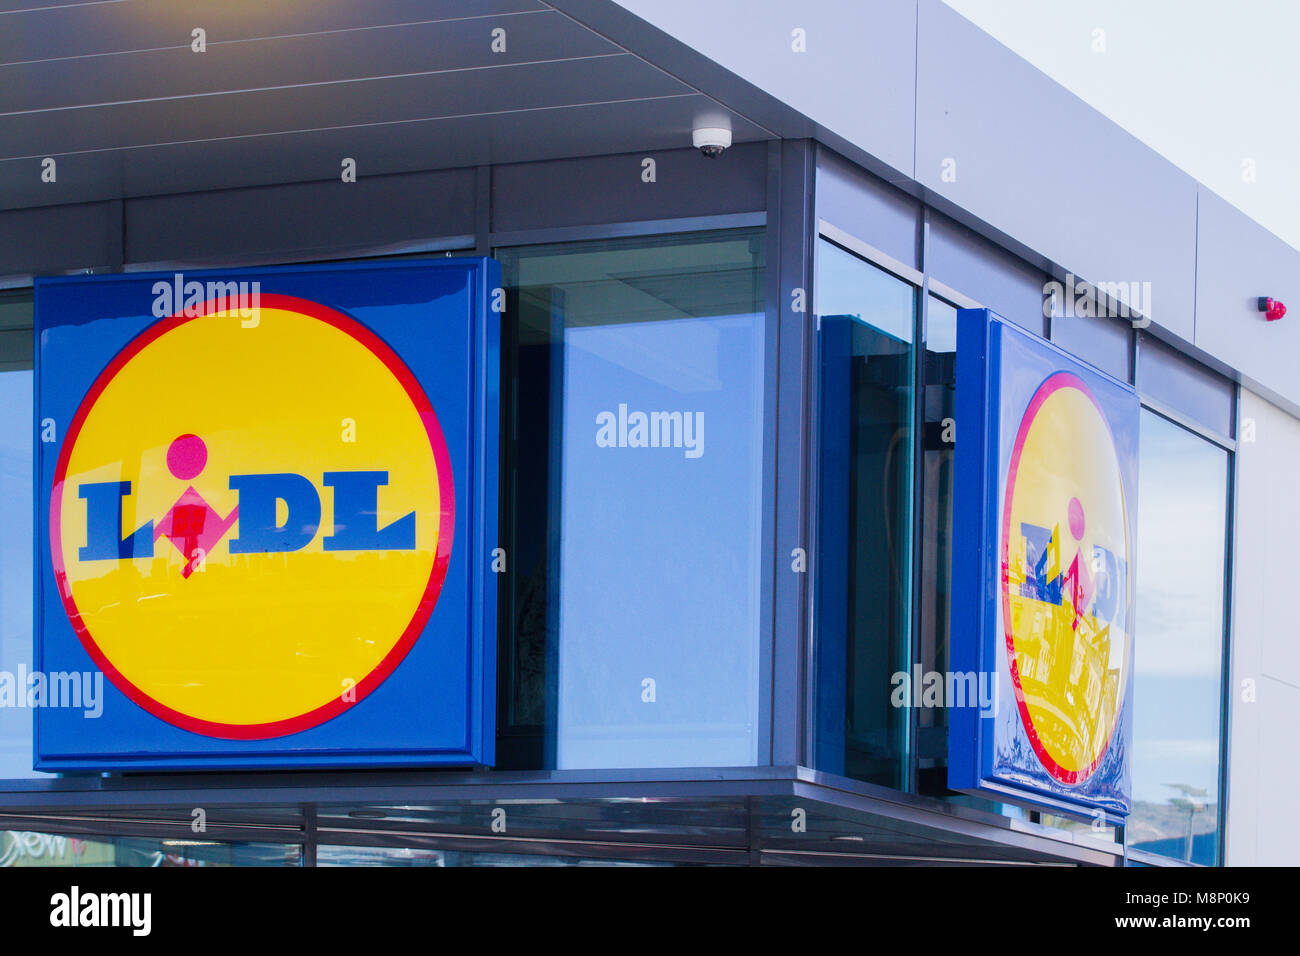 Lidl supermarket logo on new modern glass store facade Stock Photo - Alamy